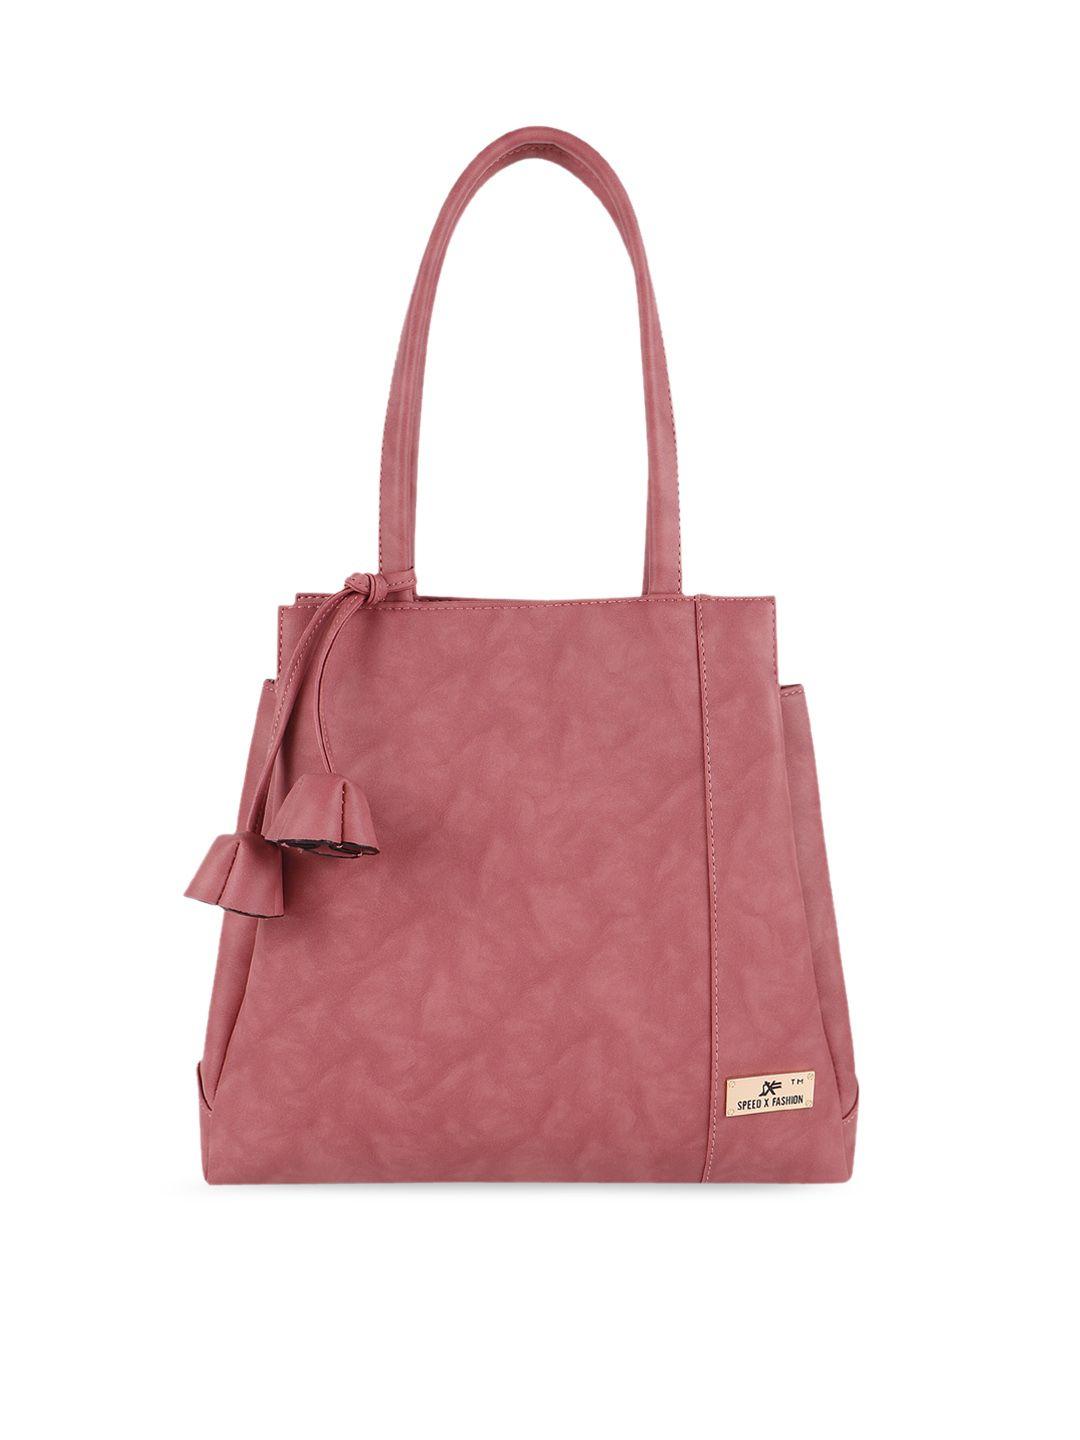 sxf speed x fashion pink pu structured handheld bag with tasselled